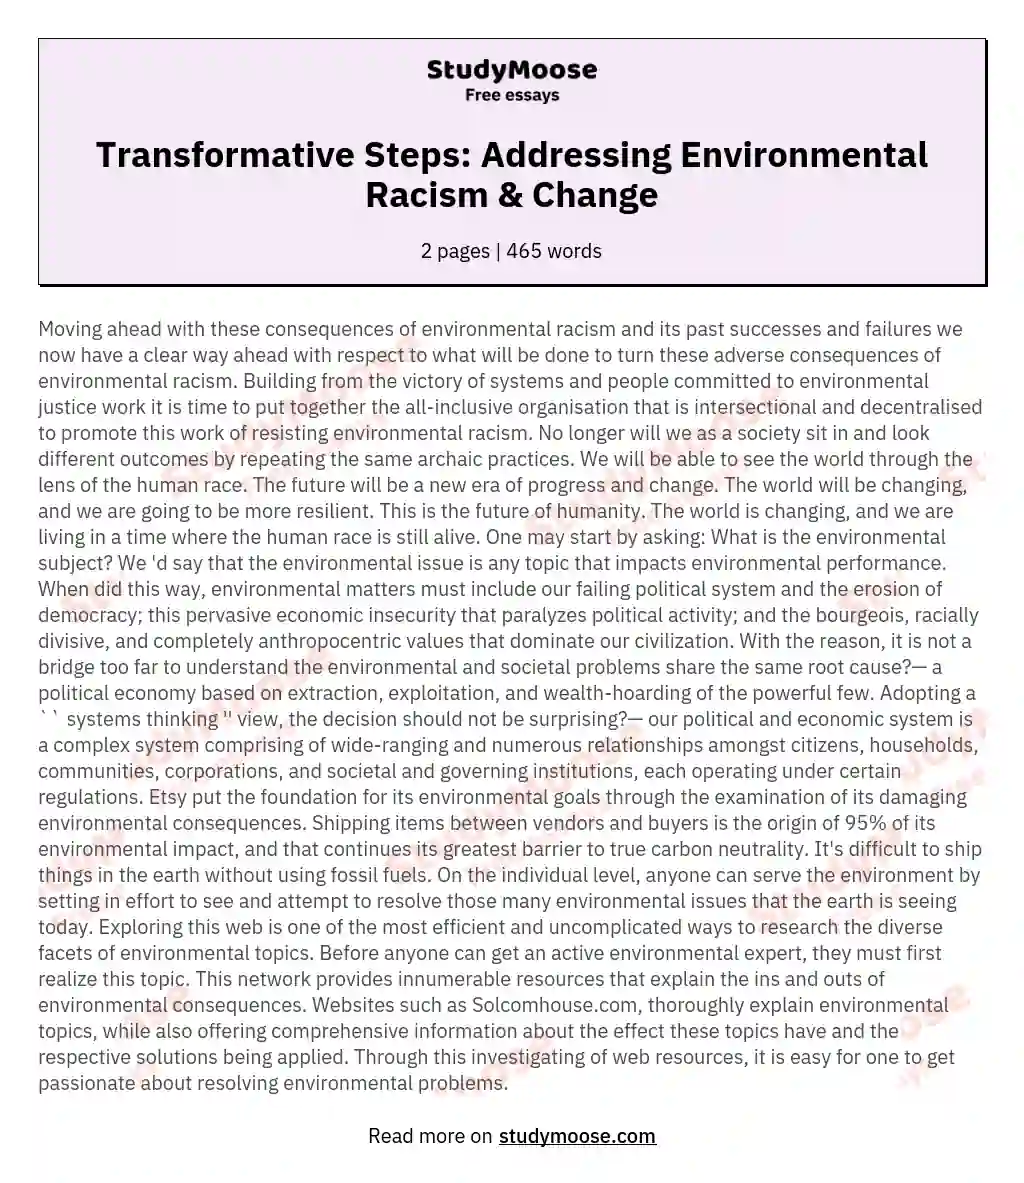 Transformative Steps: Addressing Environmental Racism & Change essay